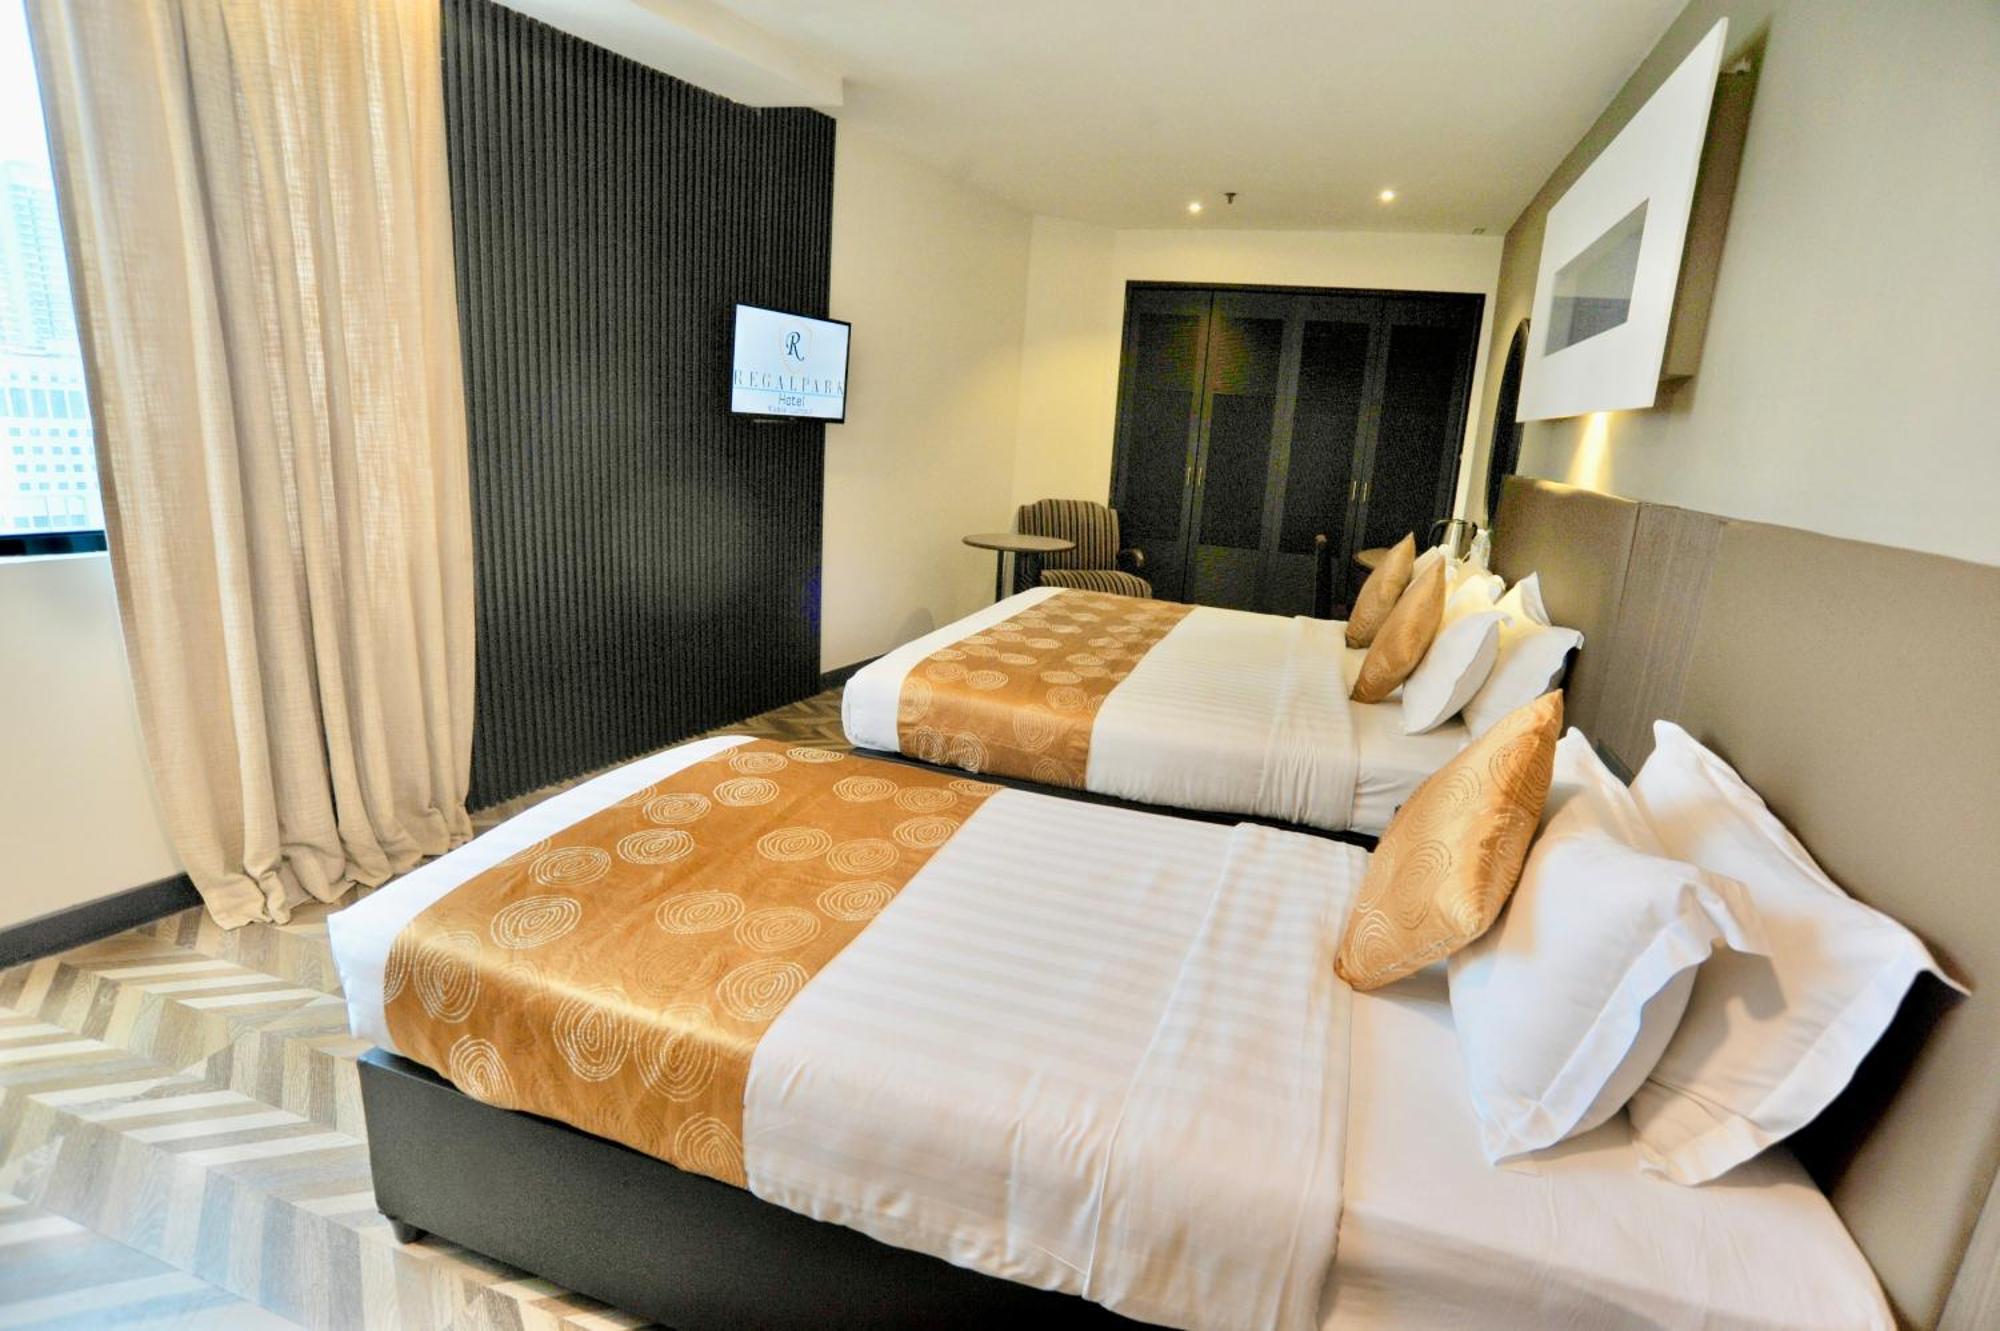 Regalpark Hotel Куала-Лумпур Экстерьер фото